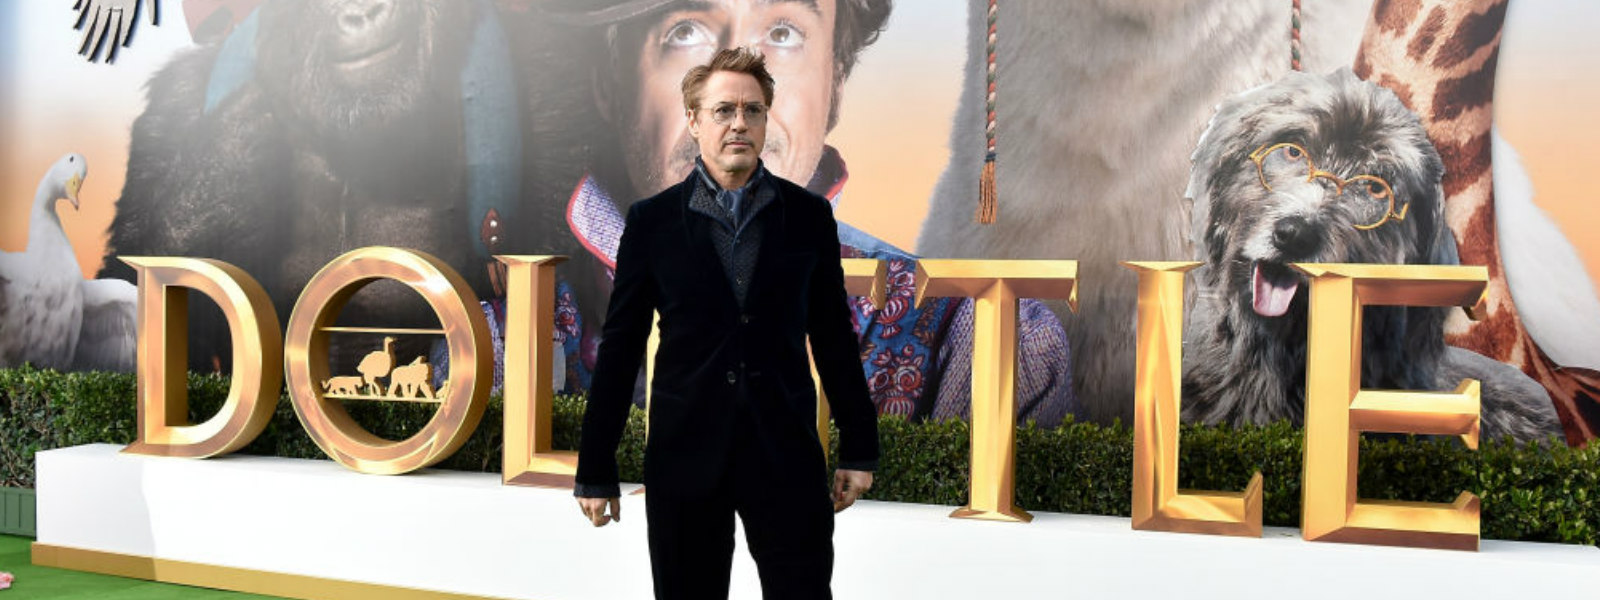 Robert Downey Jr. brings Dolittle to Berlin